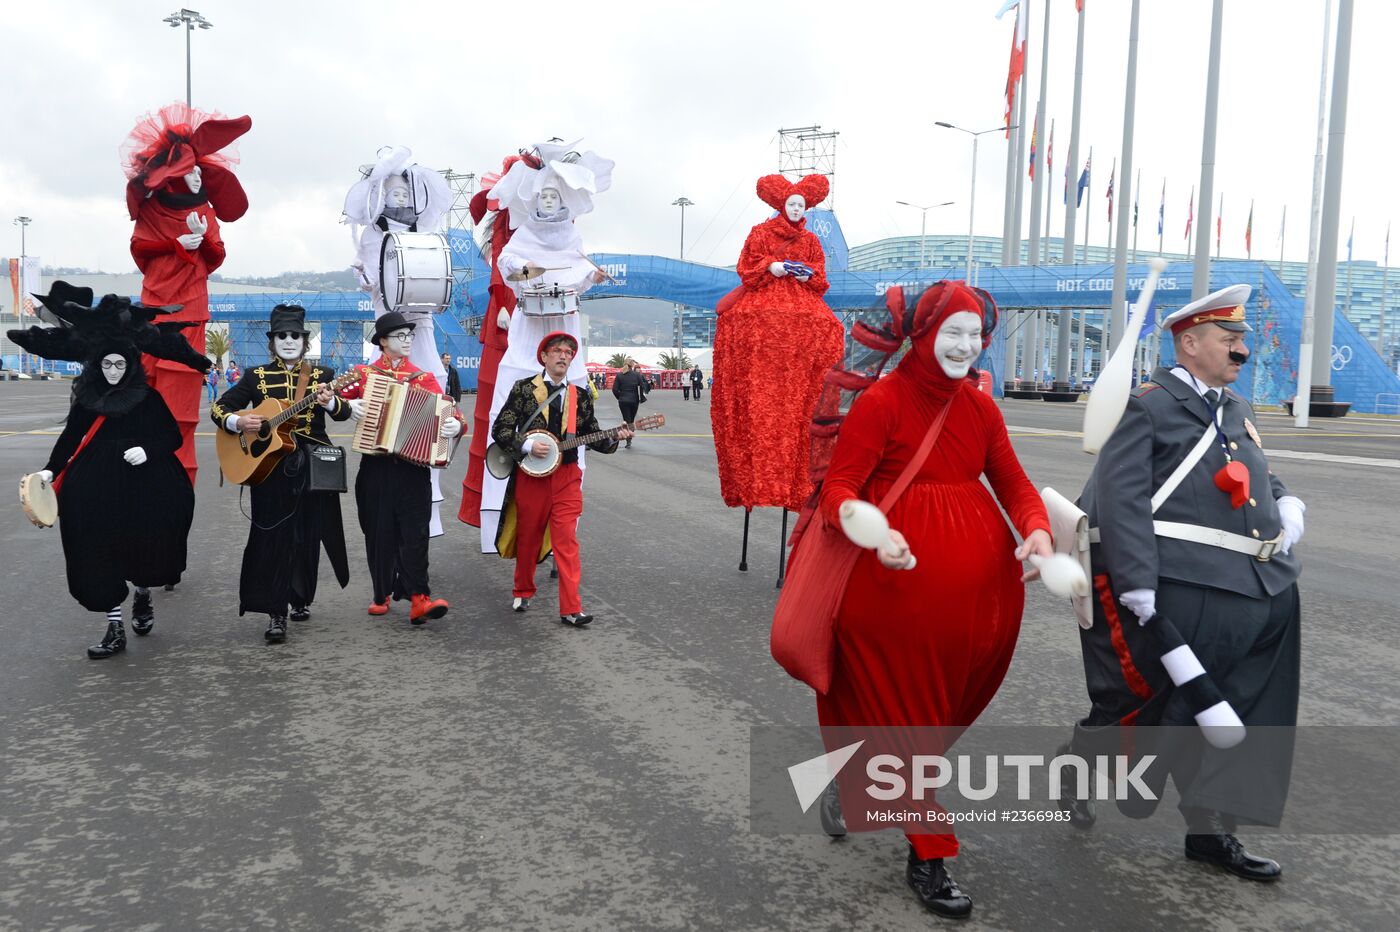 Fans in Olympic Park, Sochi